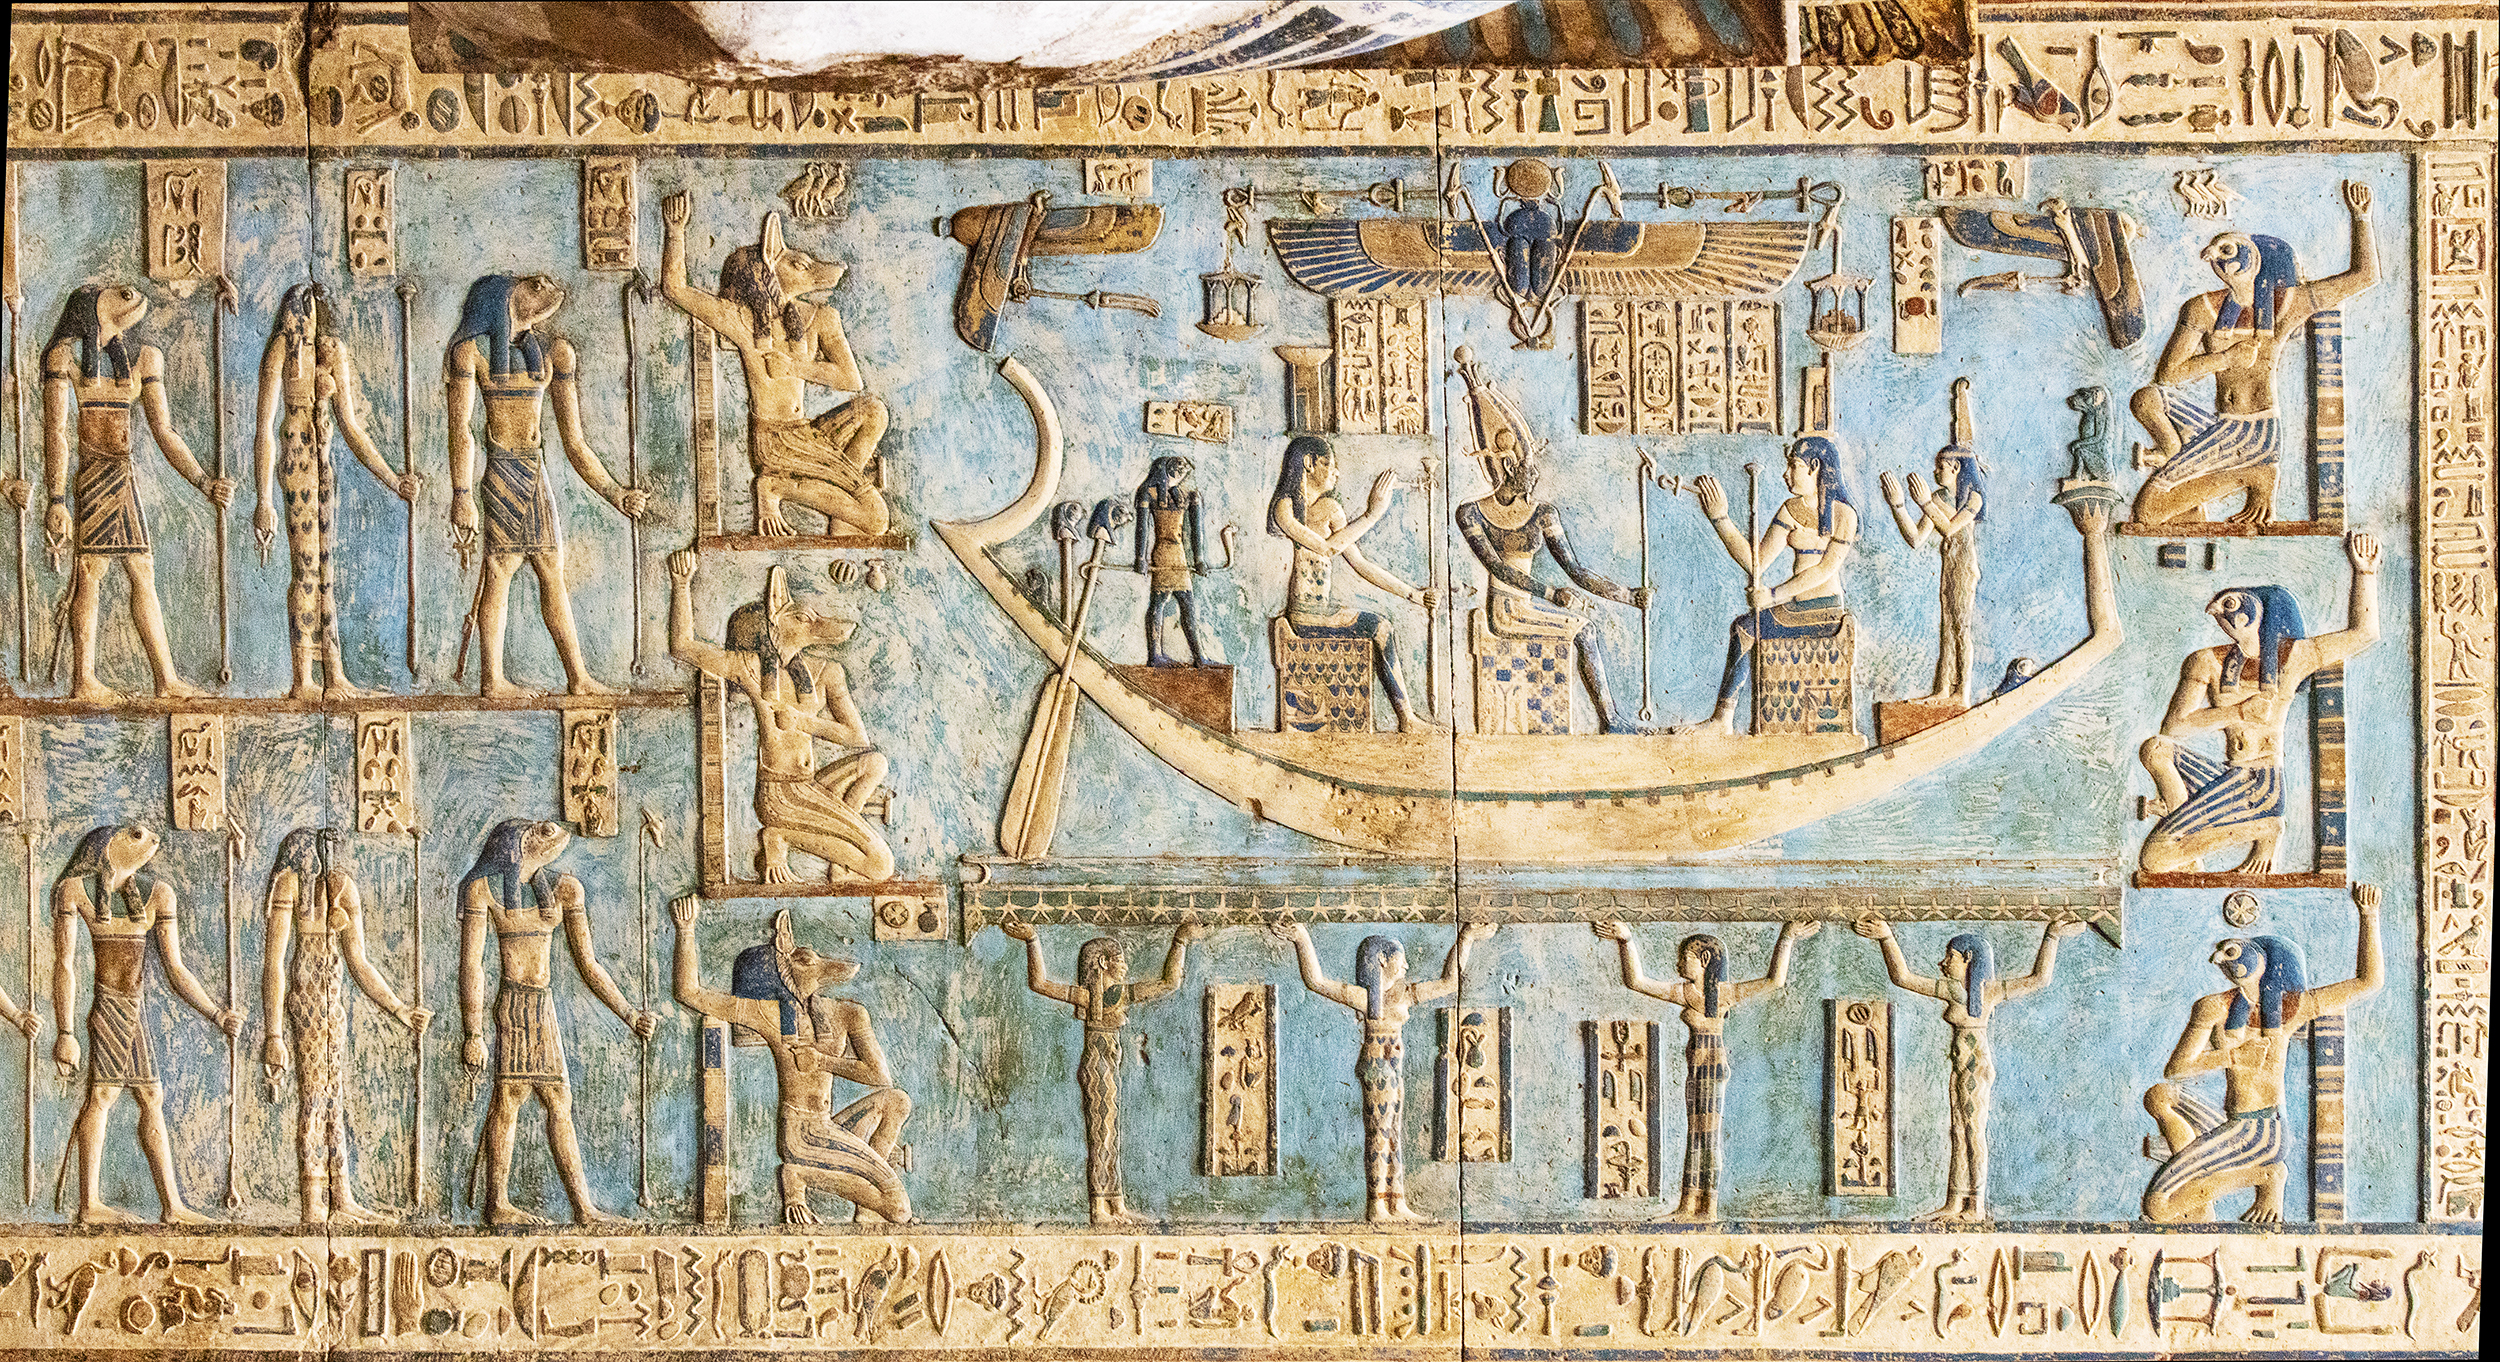 Iconic places Egypt Temple of Hathor 2019